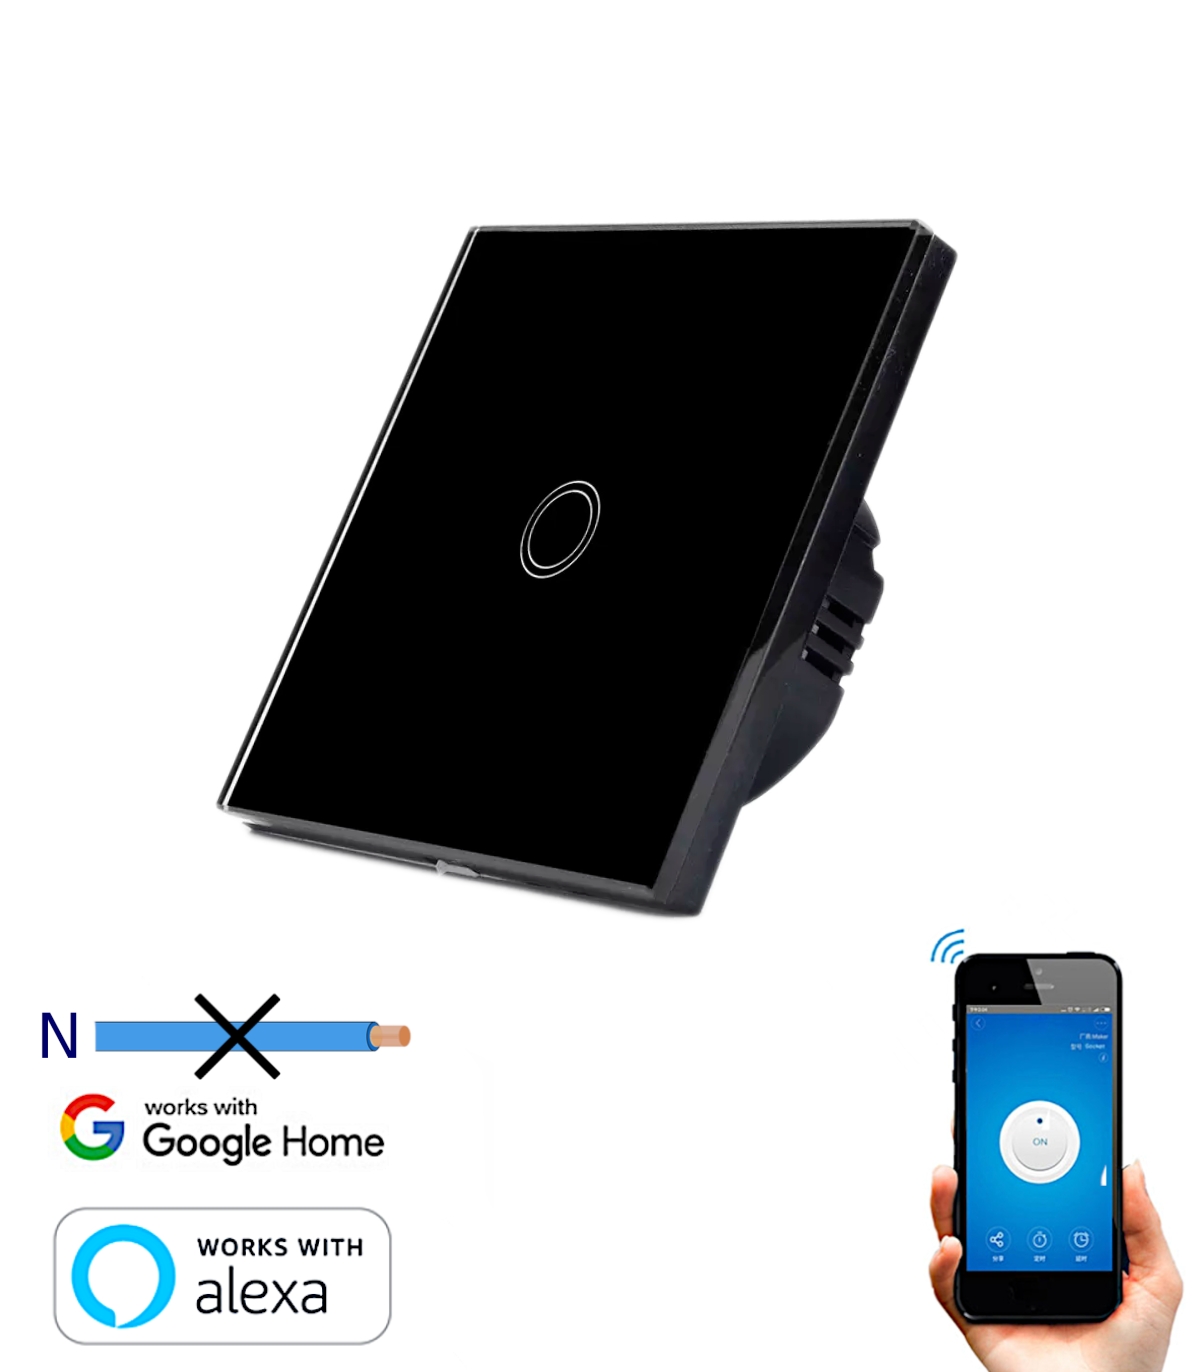 Interruptor Inteligente Wifi Táctil 3 Botones Con/Sin Neutro Negro OEM